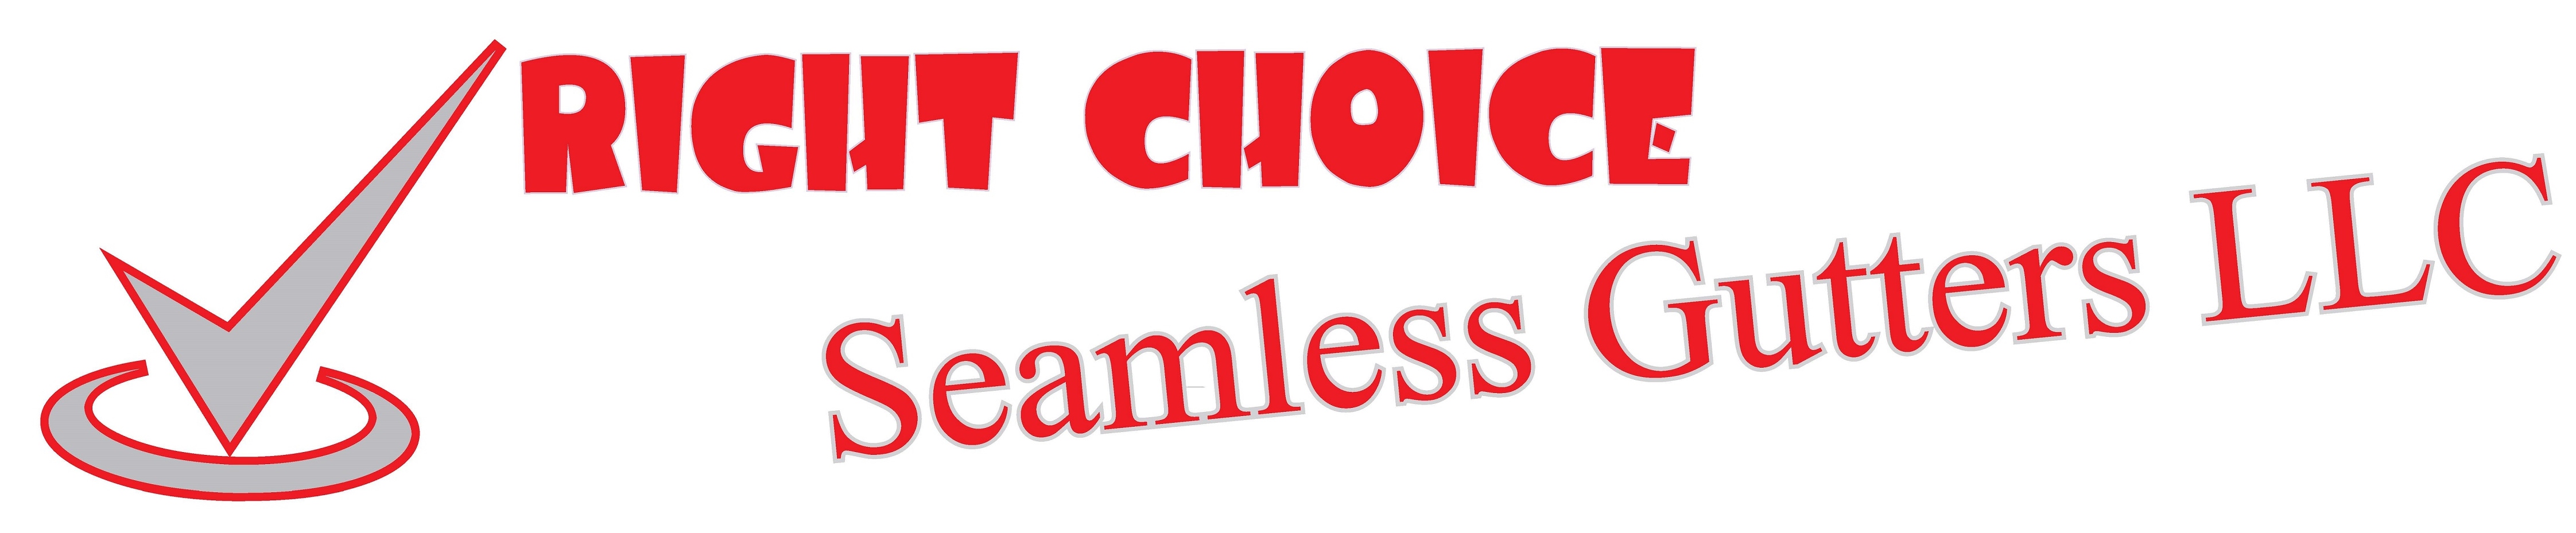 Right Choice Seamless Gutters, LLC Logo